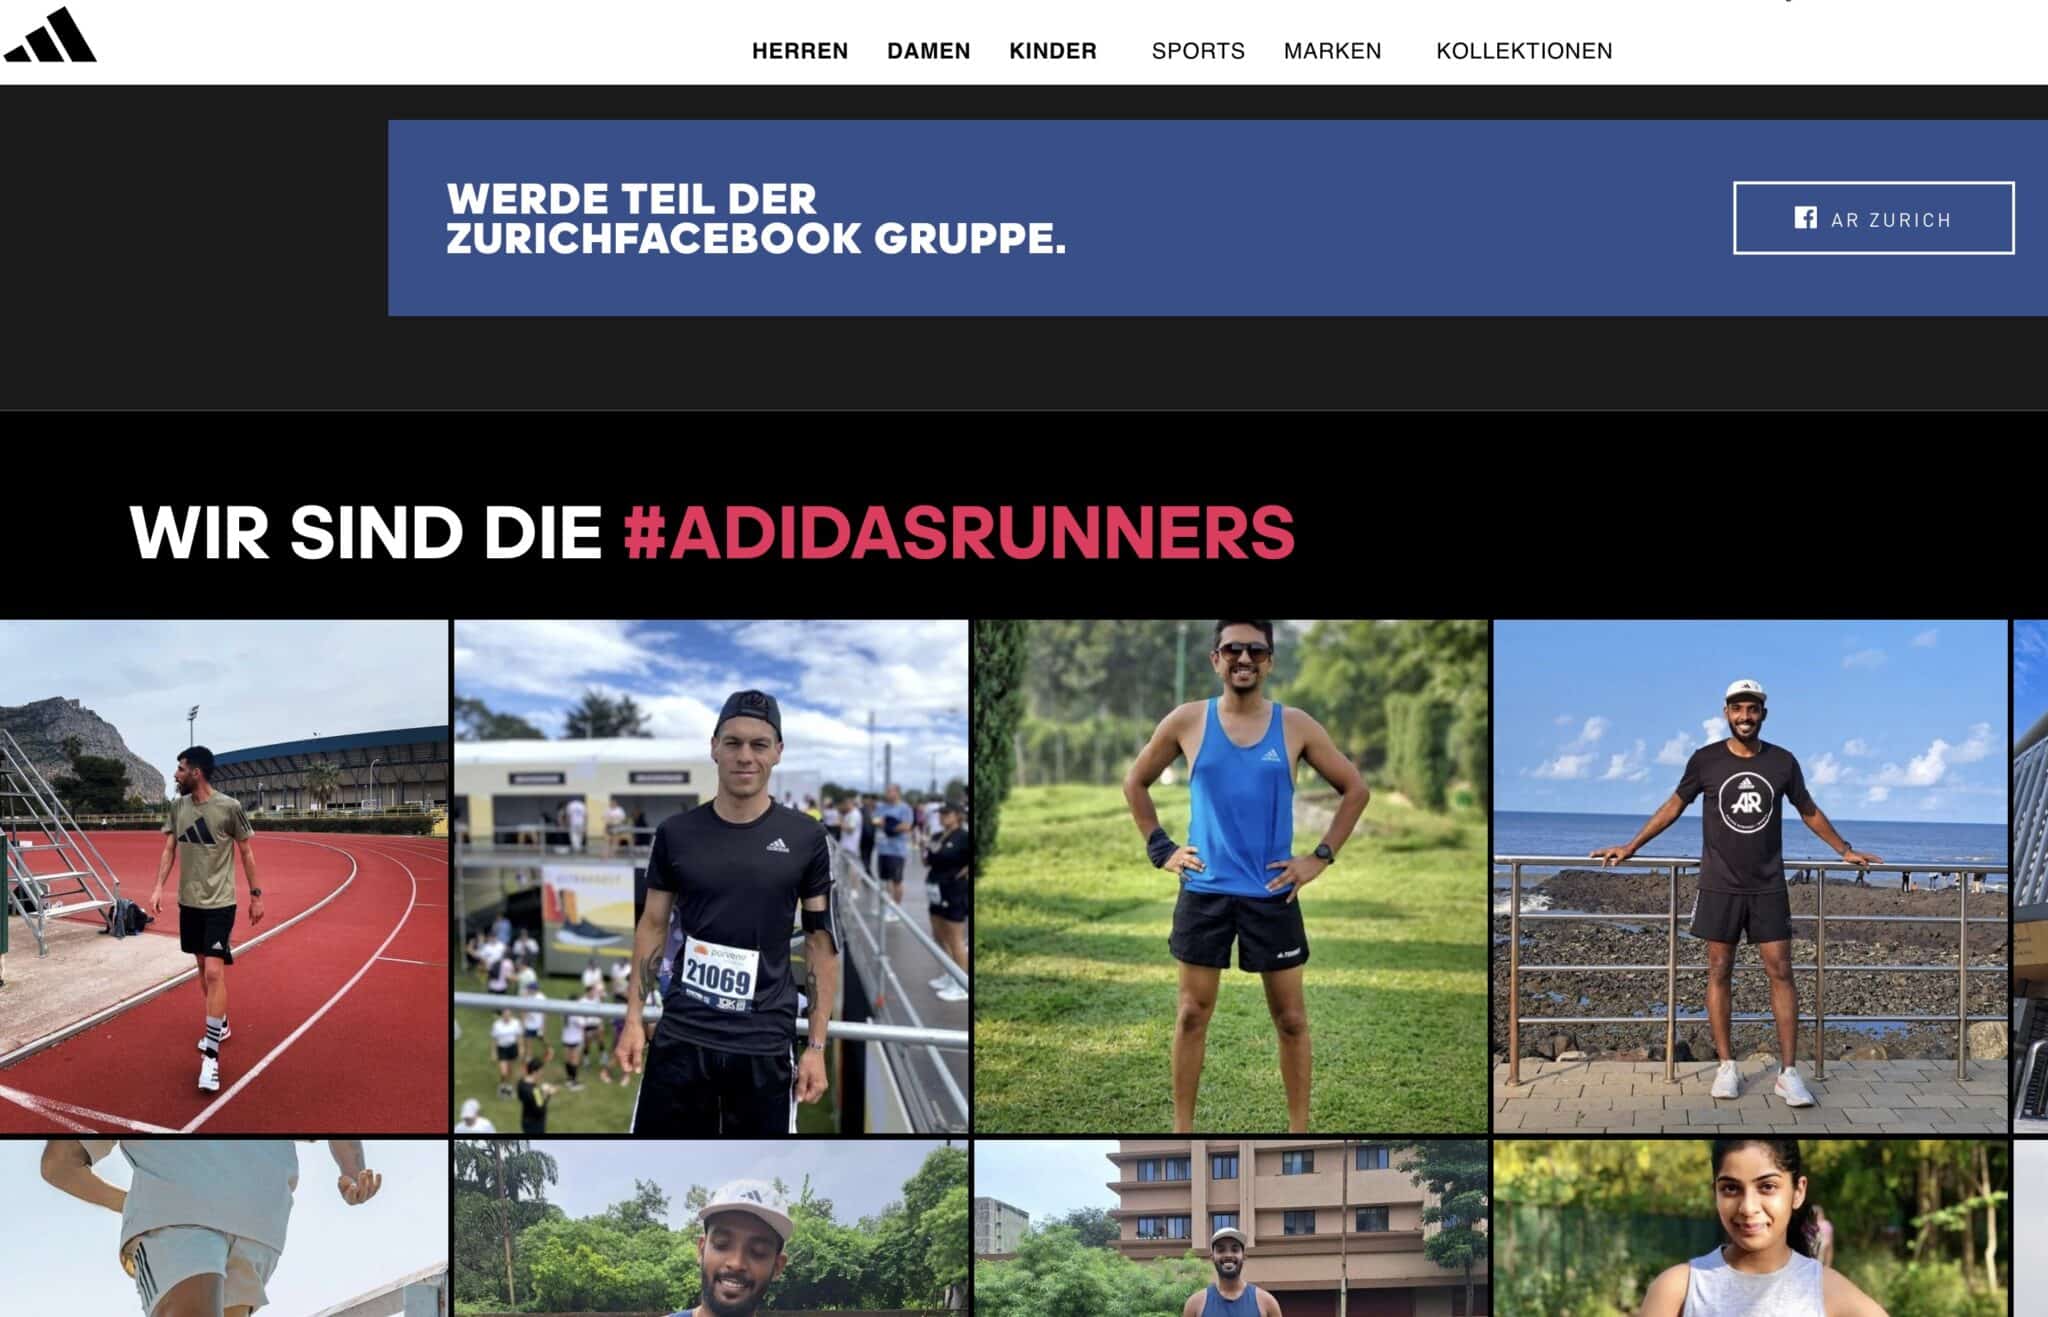 Adidas Runners